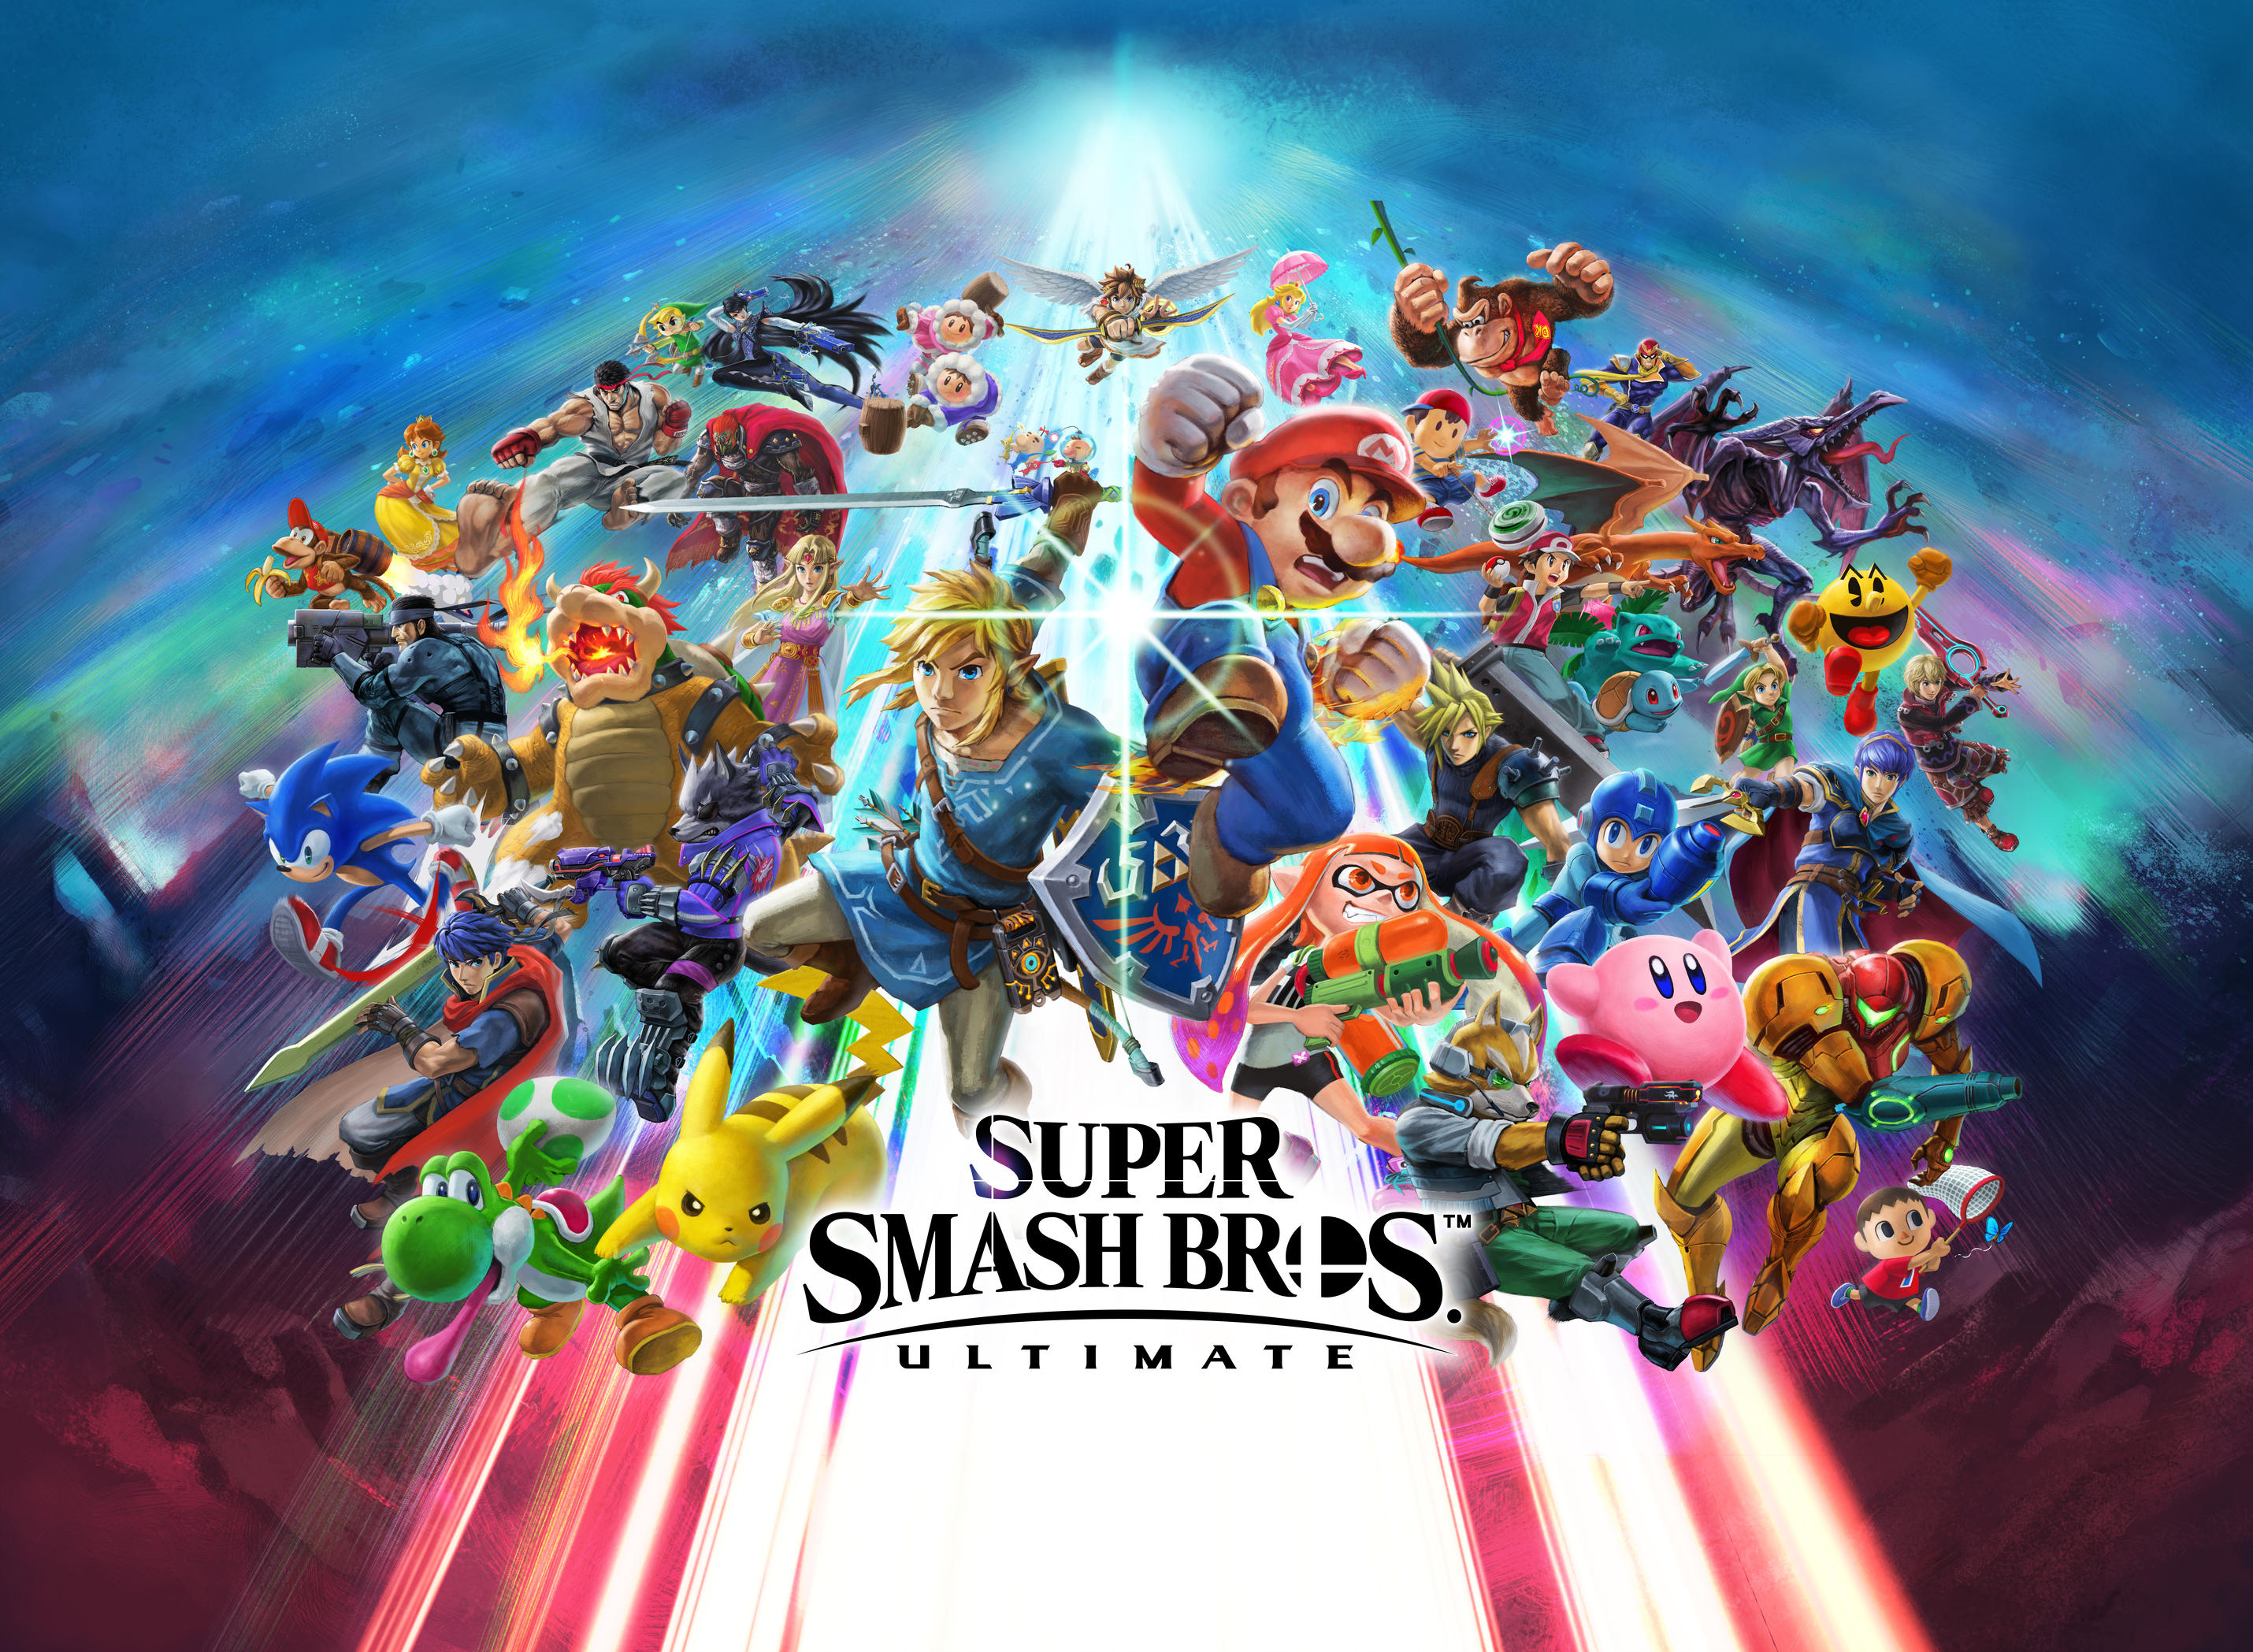 Super Smash Bros. Ultimate OFFICIAL Key Art (Wide) by Leafpenguins on